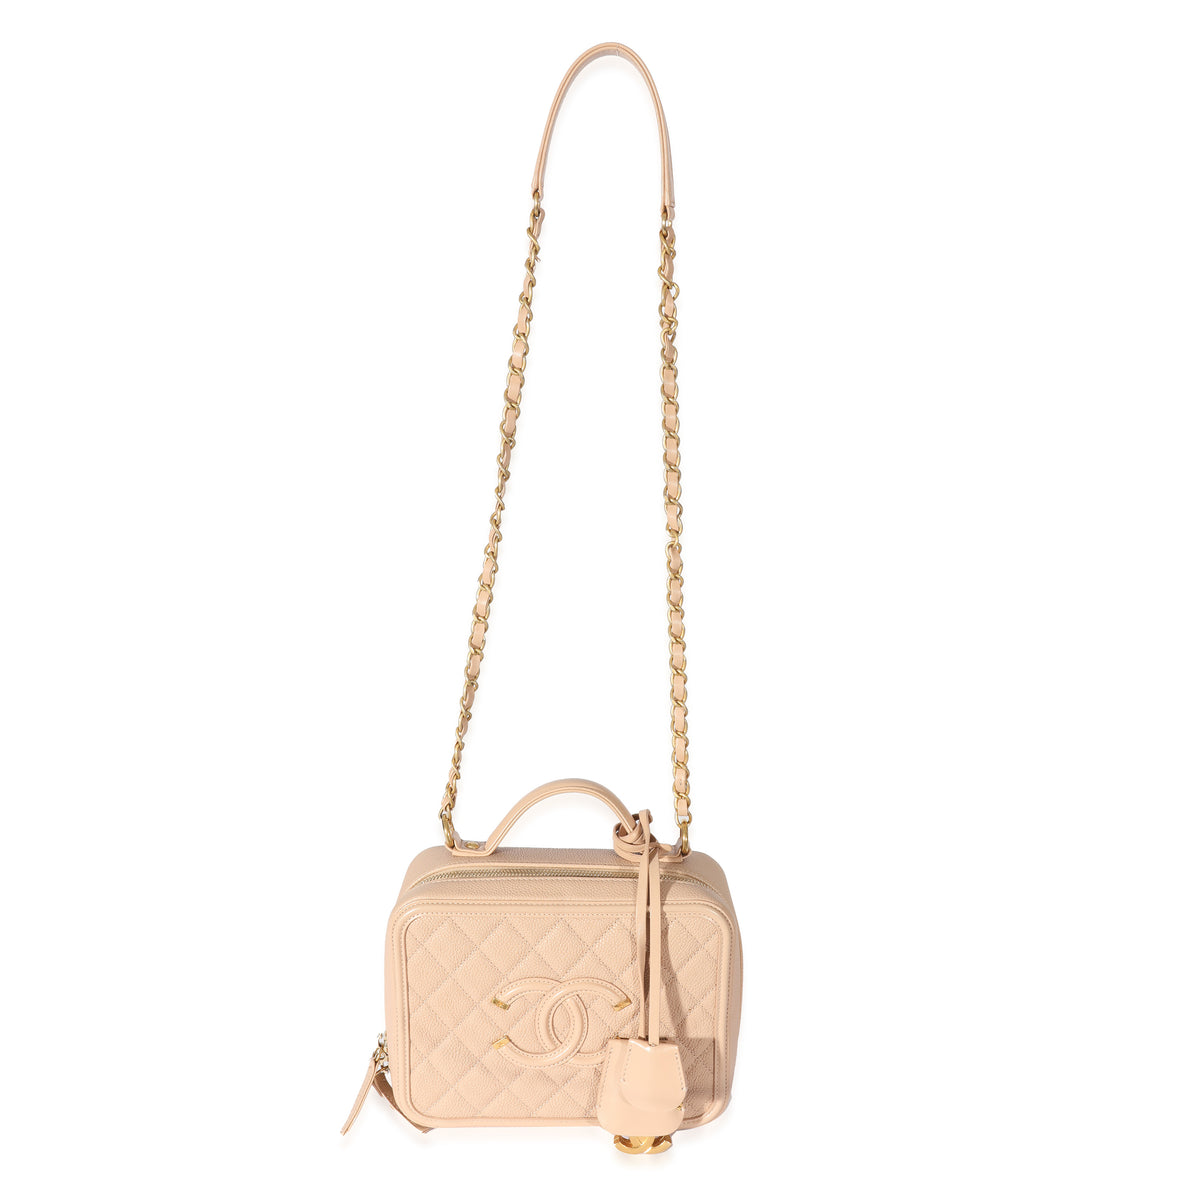 Handbags Chanel Chanel Beige Quilted Caviar Leather Medium CC Filigree Vanity Case Bag